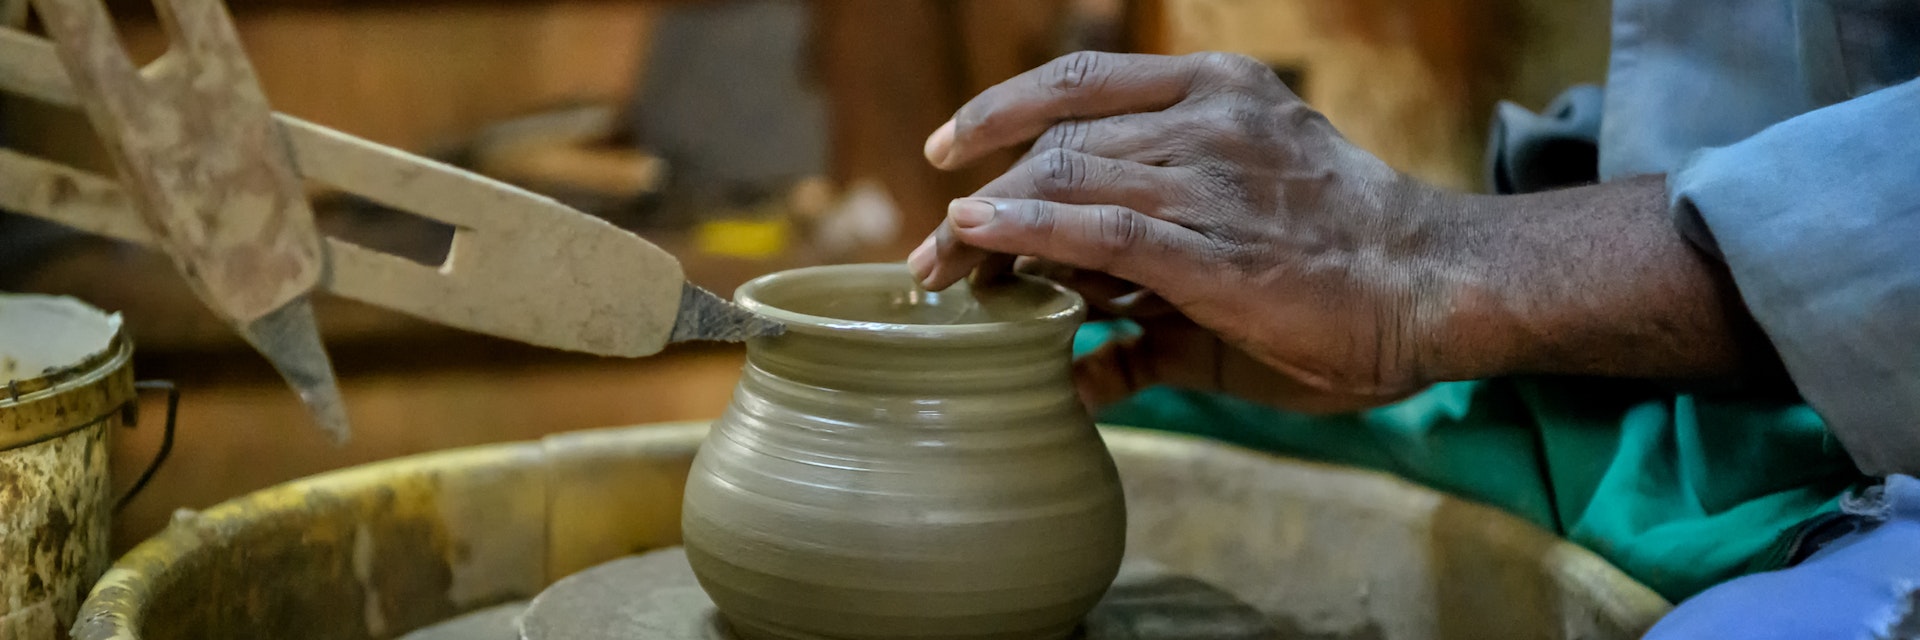 Making pottery at Kazuri Bead Factory, Nairobi, Kenya, East Africa
1045644384
making pottery, beads, kazuri bead factory